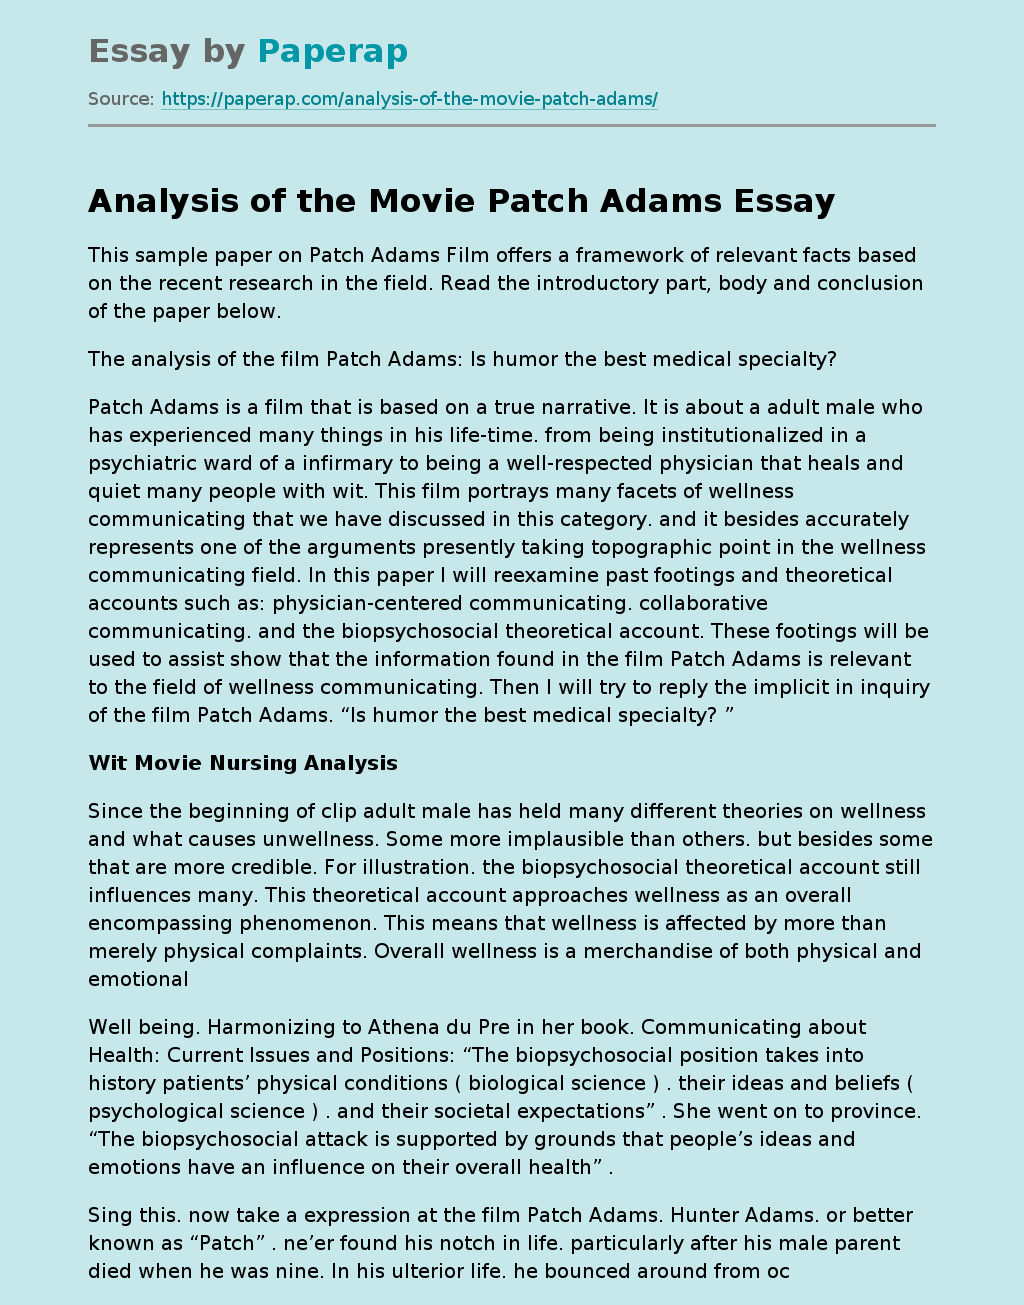 Analysis of the Movie Patch Adams